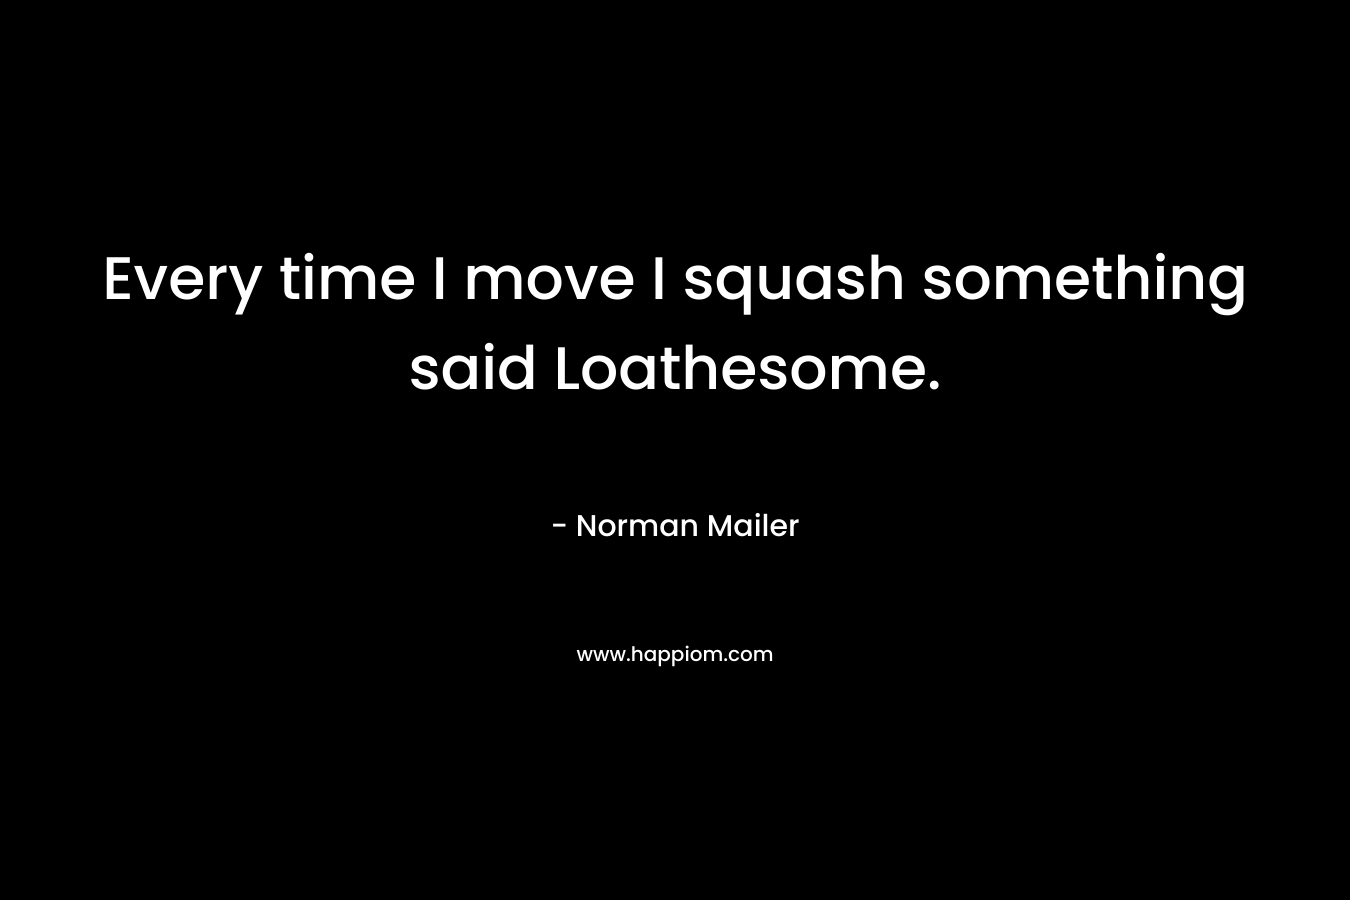 Every time I move I squash something said Loathesome.